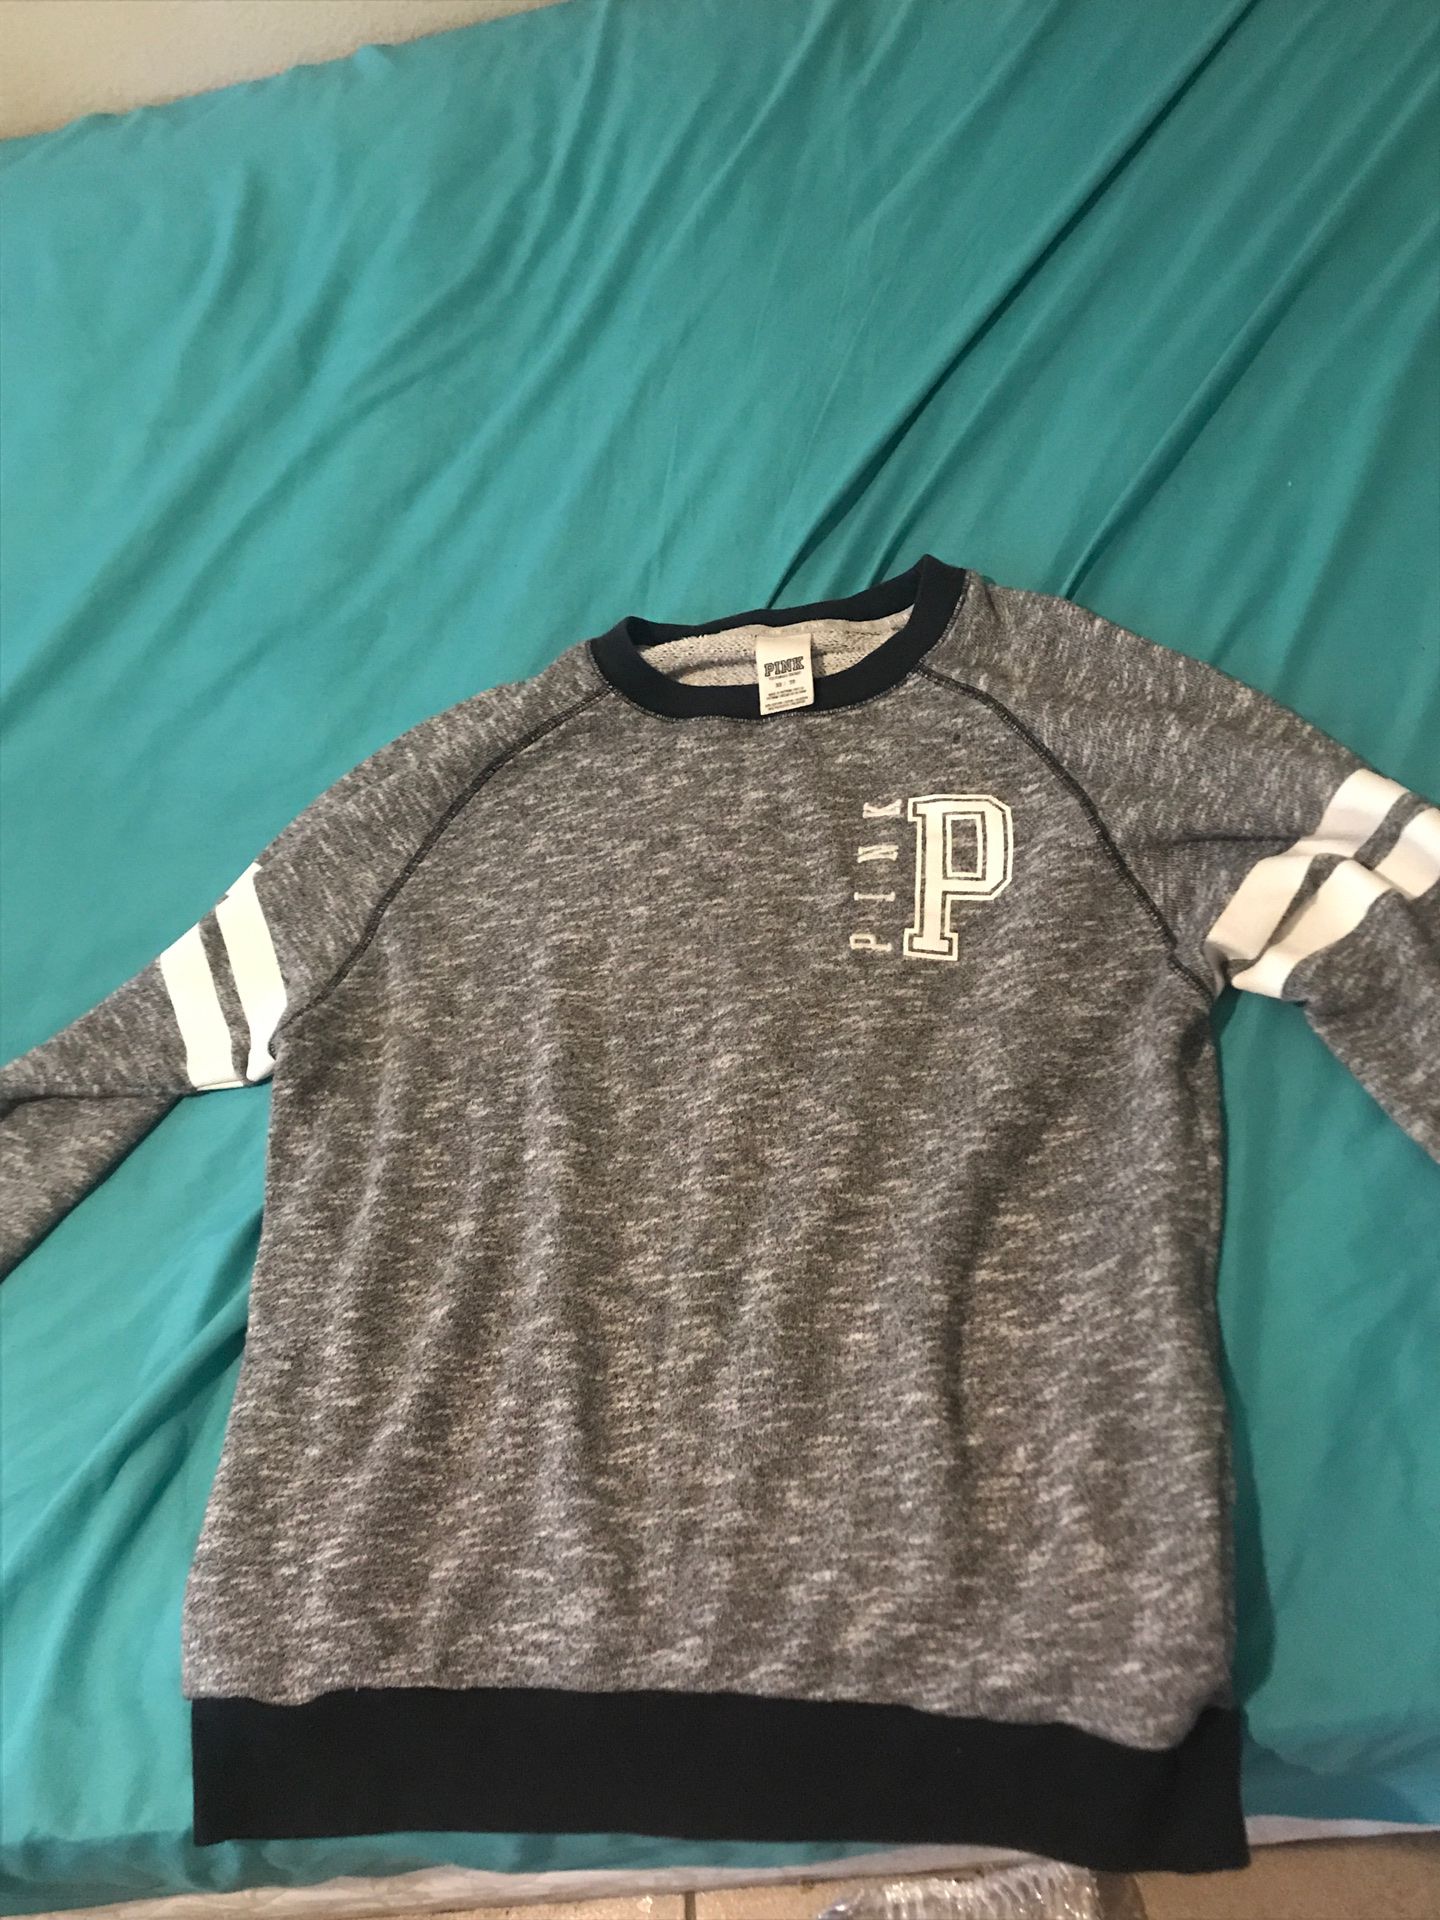 Pink sweater/ shirt